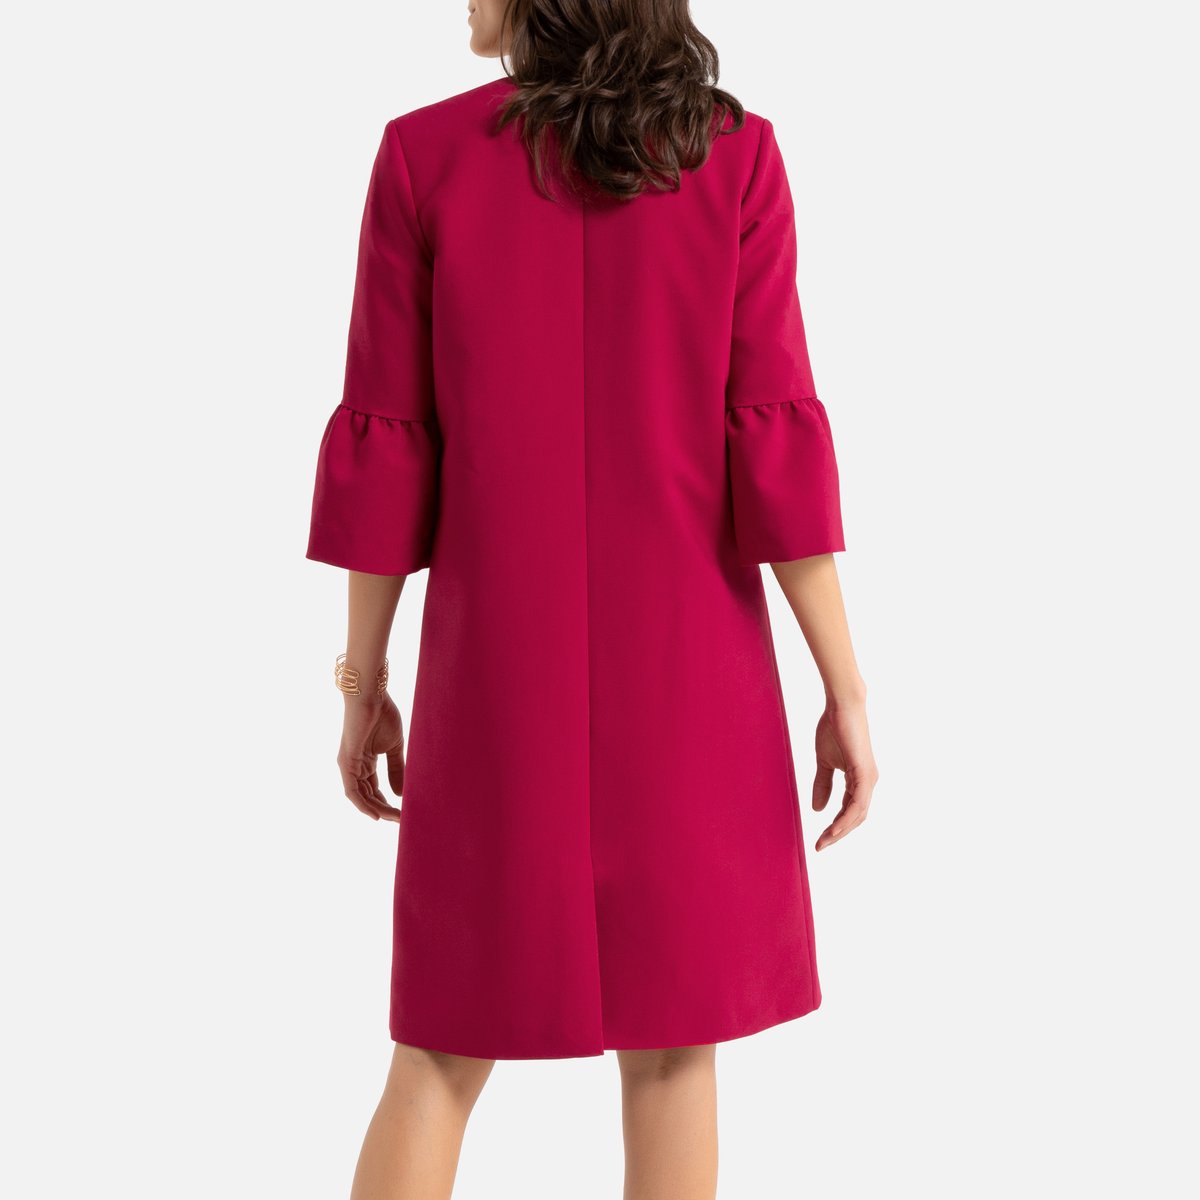 Пальто La Redoute Из гипюра 40 (FR) - 46 (RUS) розовый, размер 40 (FR) - 46 (RUS) Из гипюра 40 (FR) - 46 (RUS) розовый - фото 4